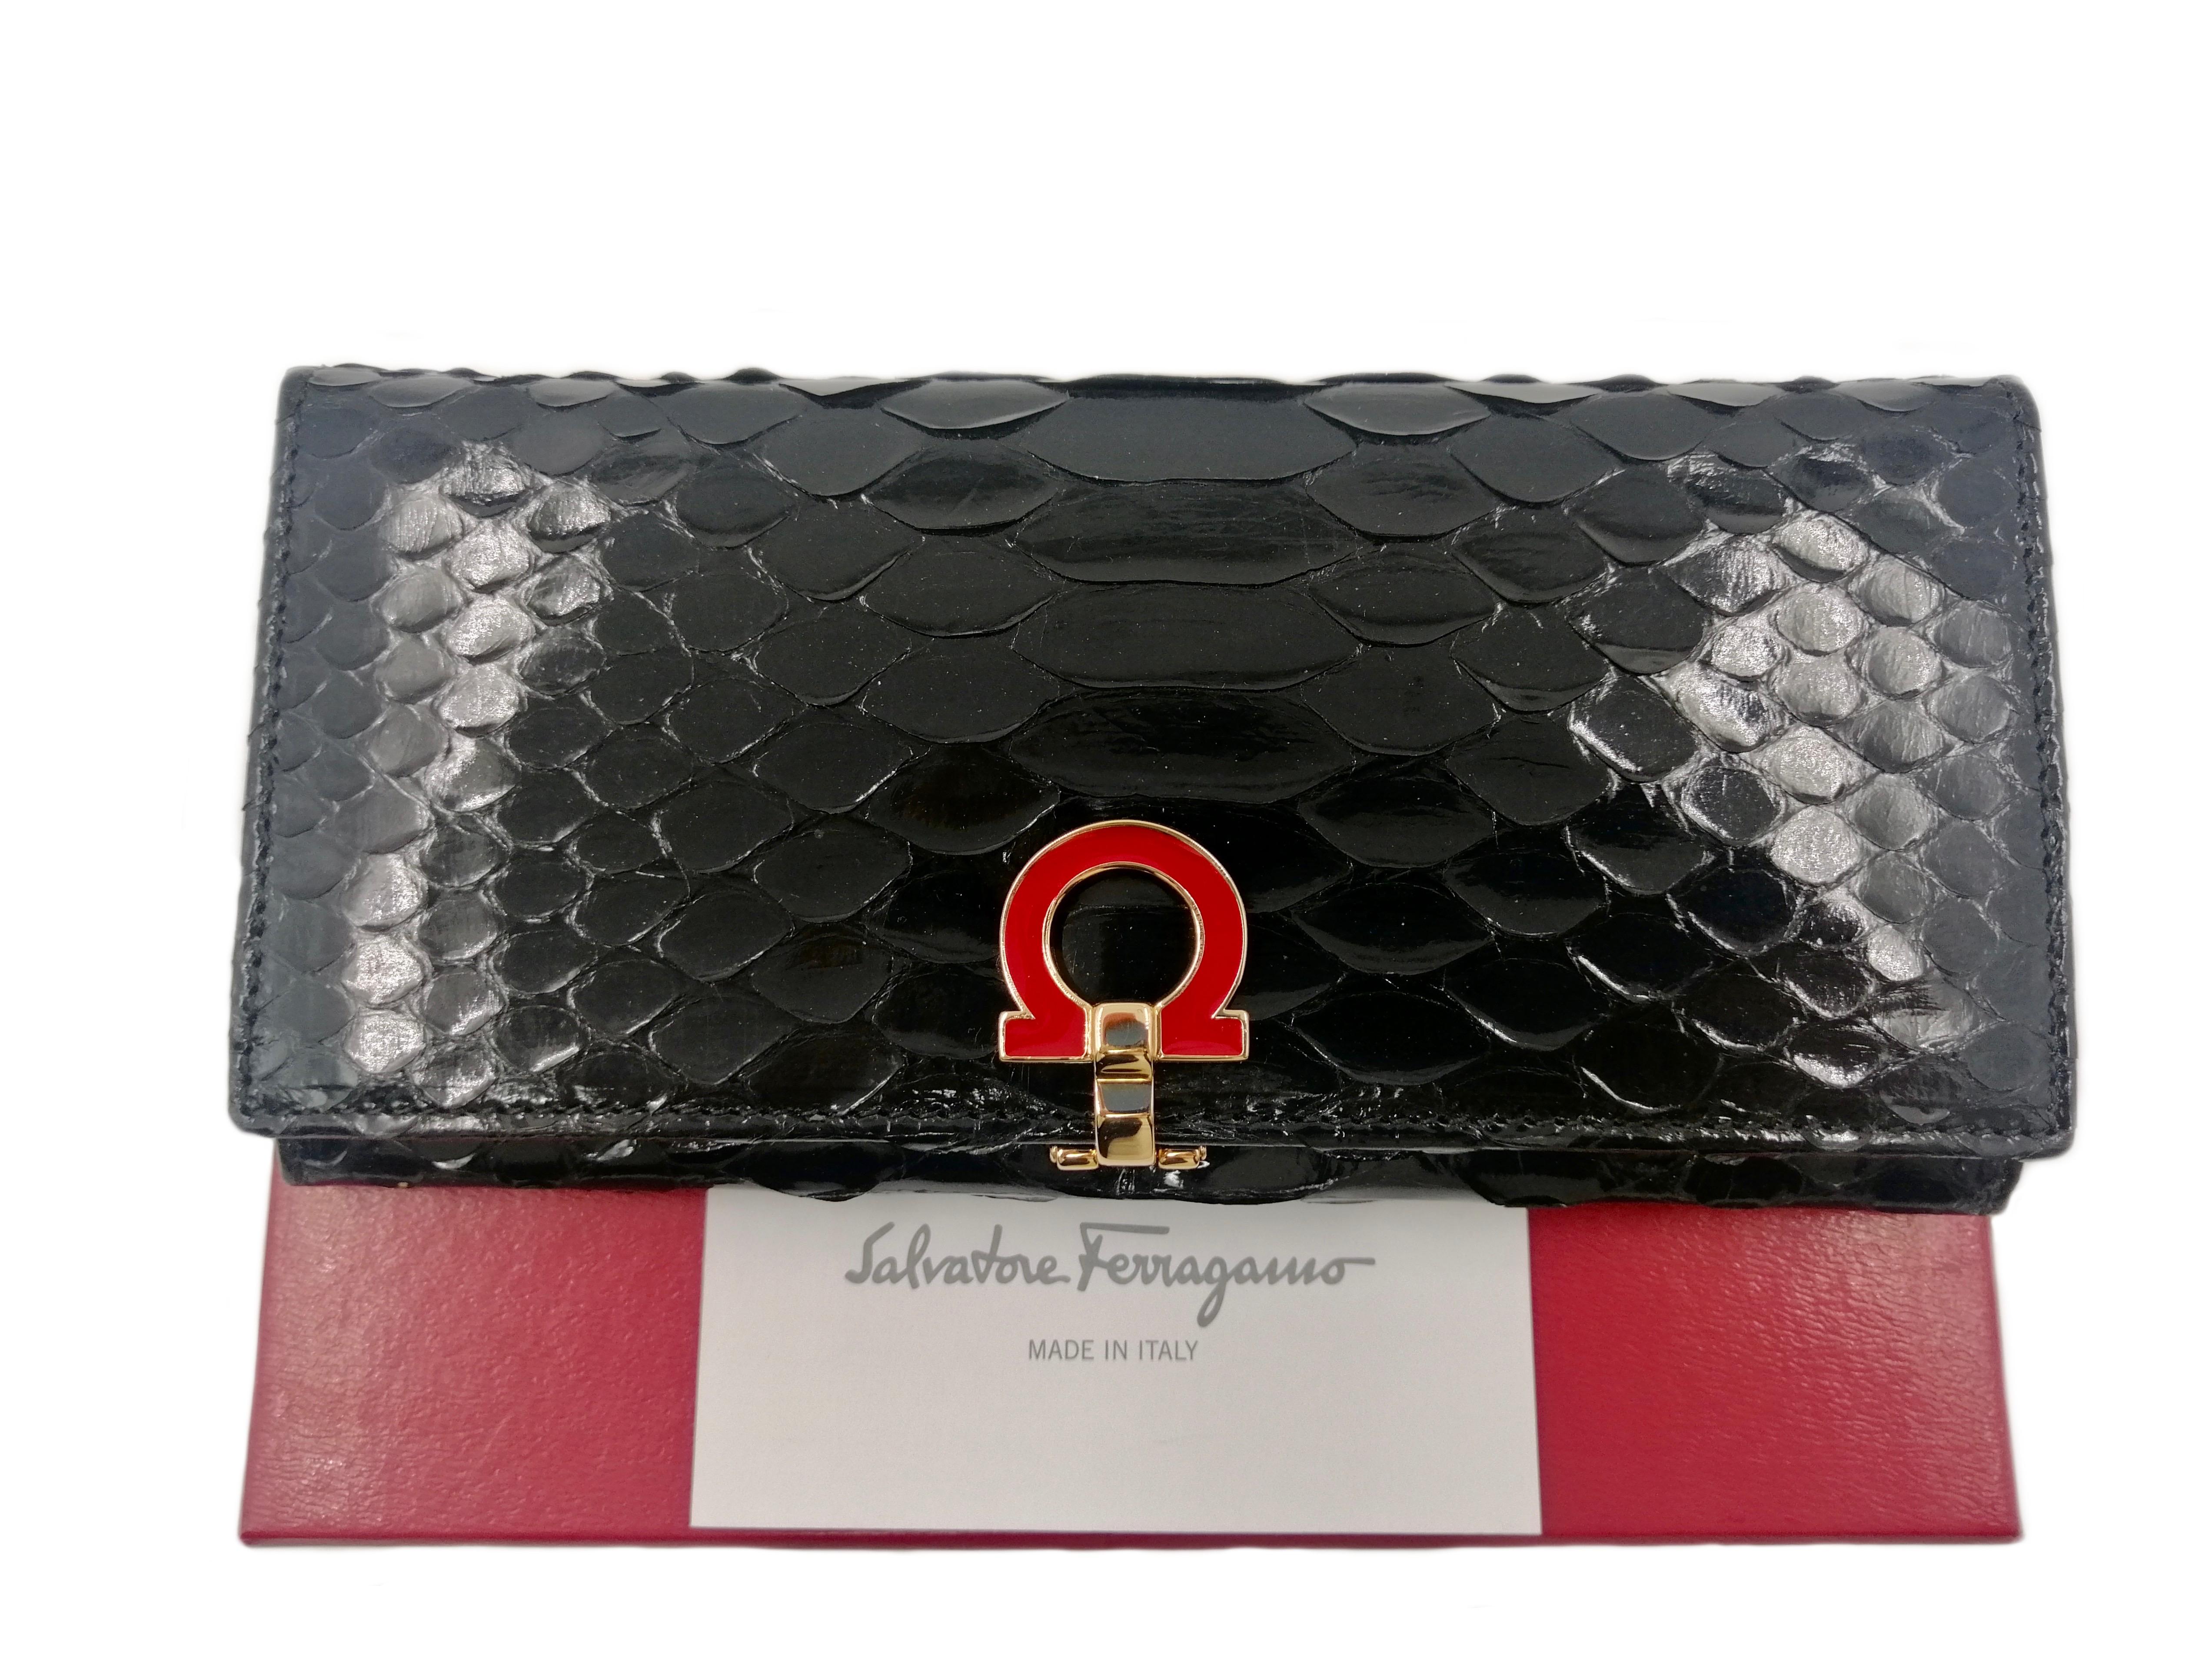 Salvatore Ferragamo wallet
Black python with red enamel logo closure
Measures: Length cm. 19 - Height cm. 9 - Depth cm. 3
New condition